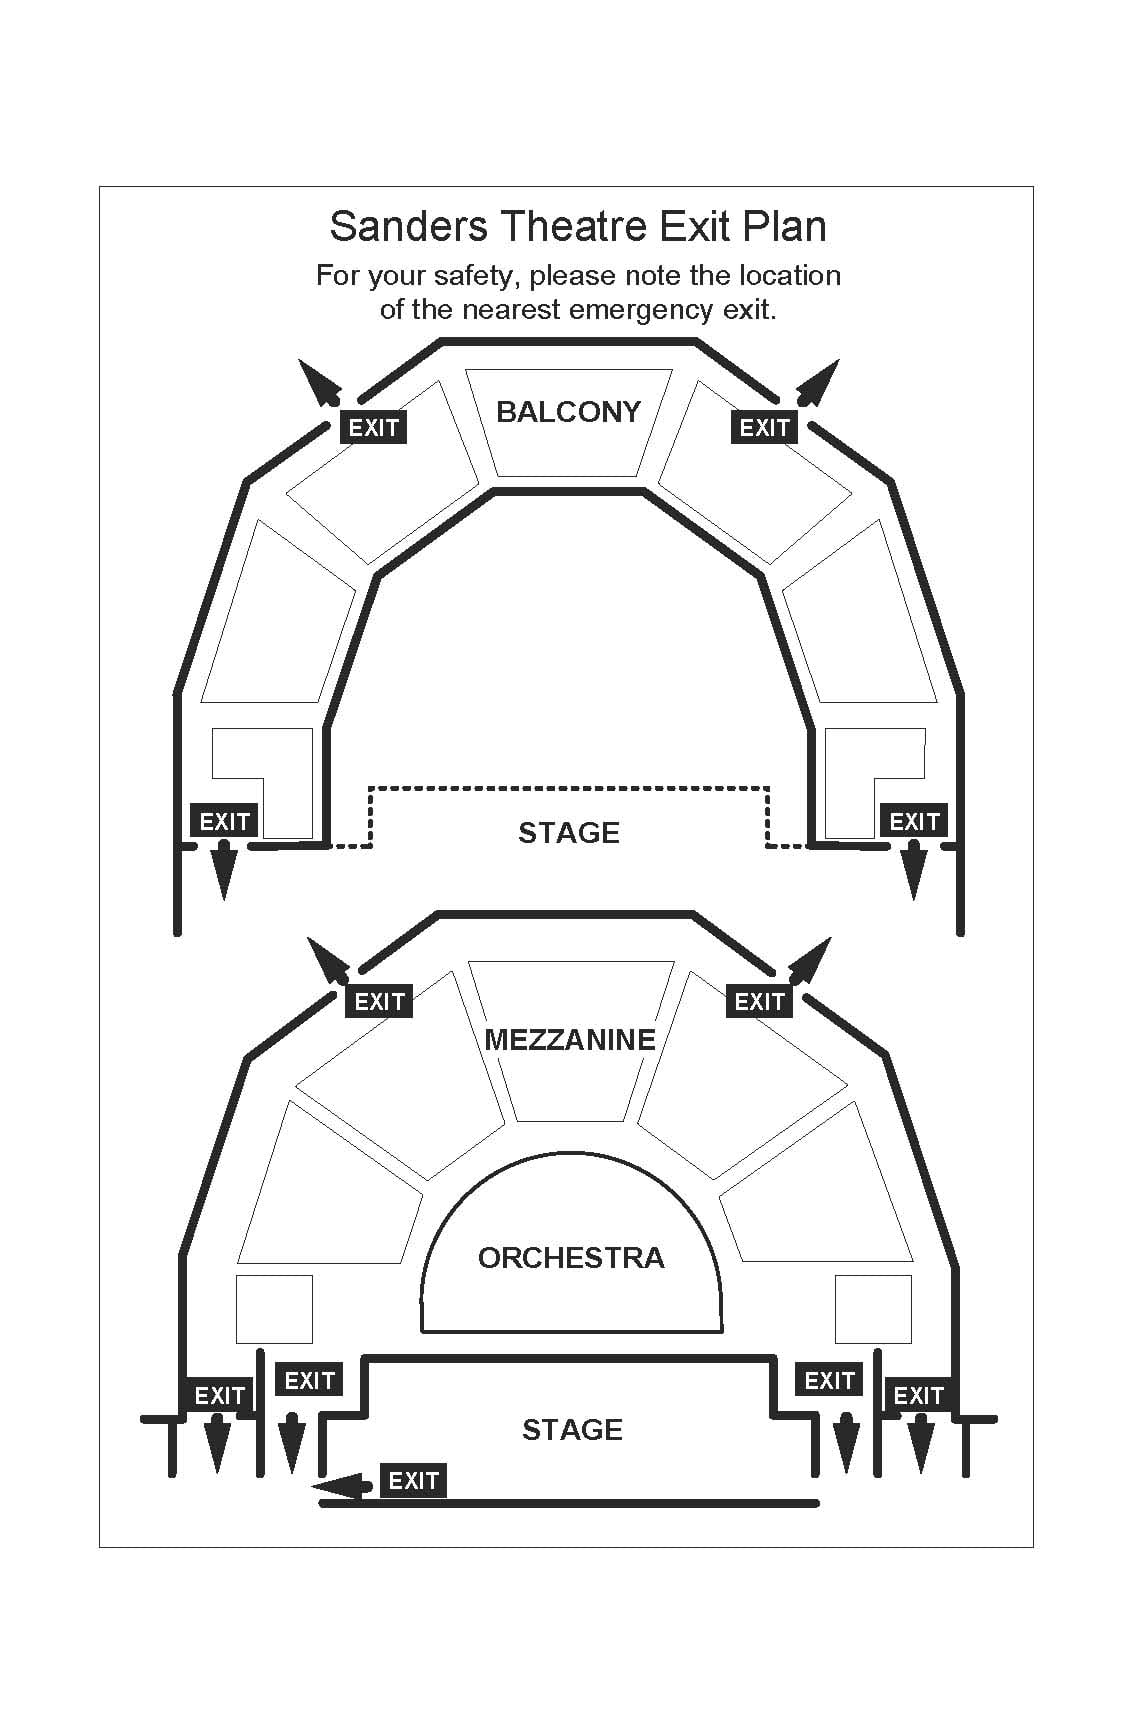 Sanders Theatre Exit Plan drawing